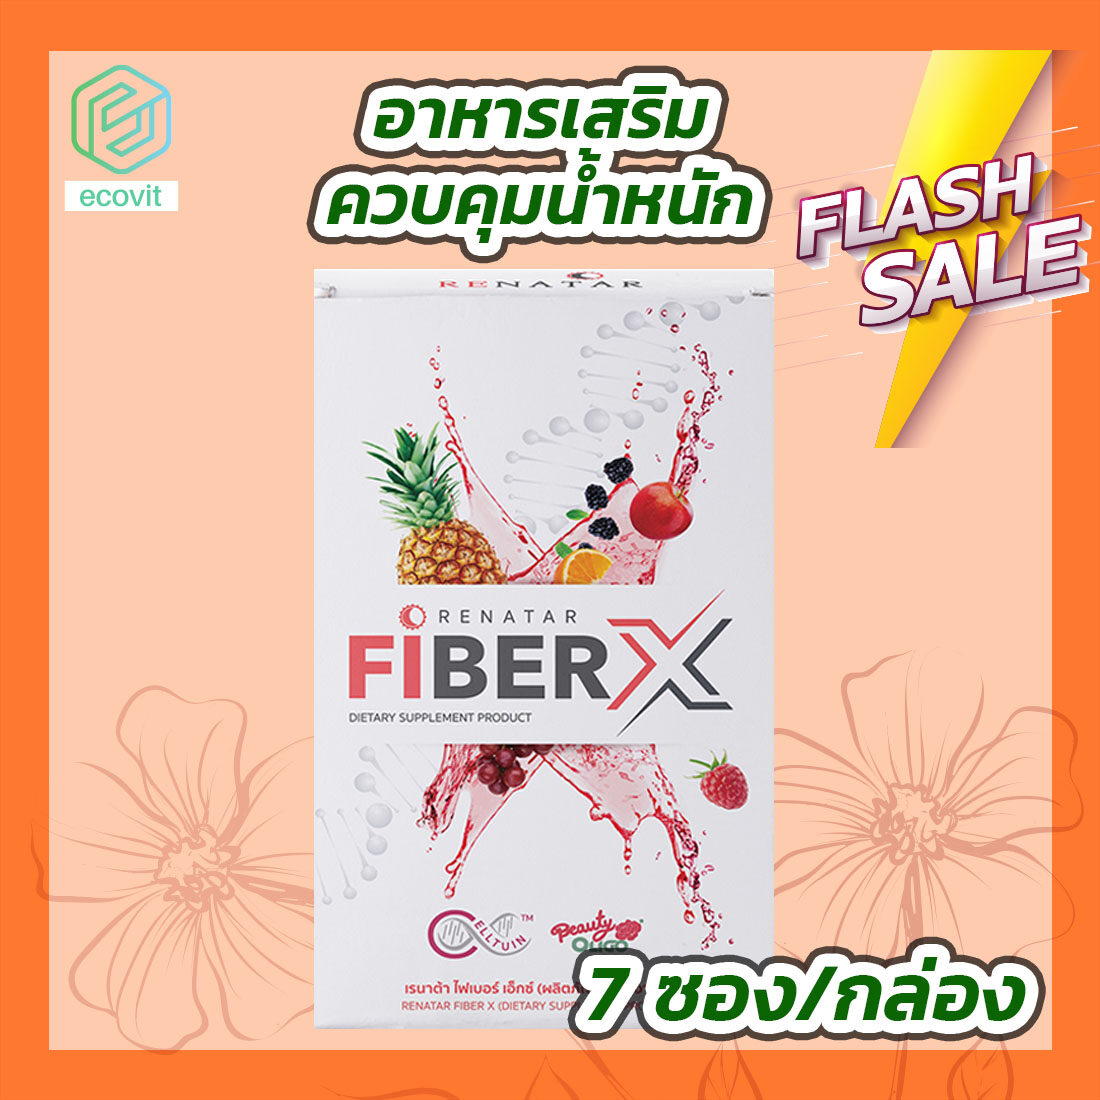 Renatar Fiber X (7 ซอง) เรนาต้าไฟเบอร์ X  อาหารเสริม By Ecovit